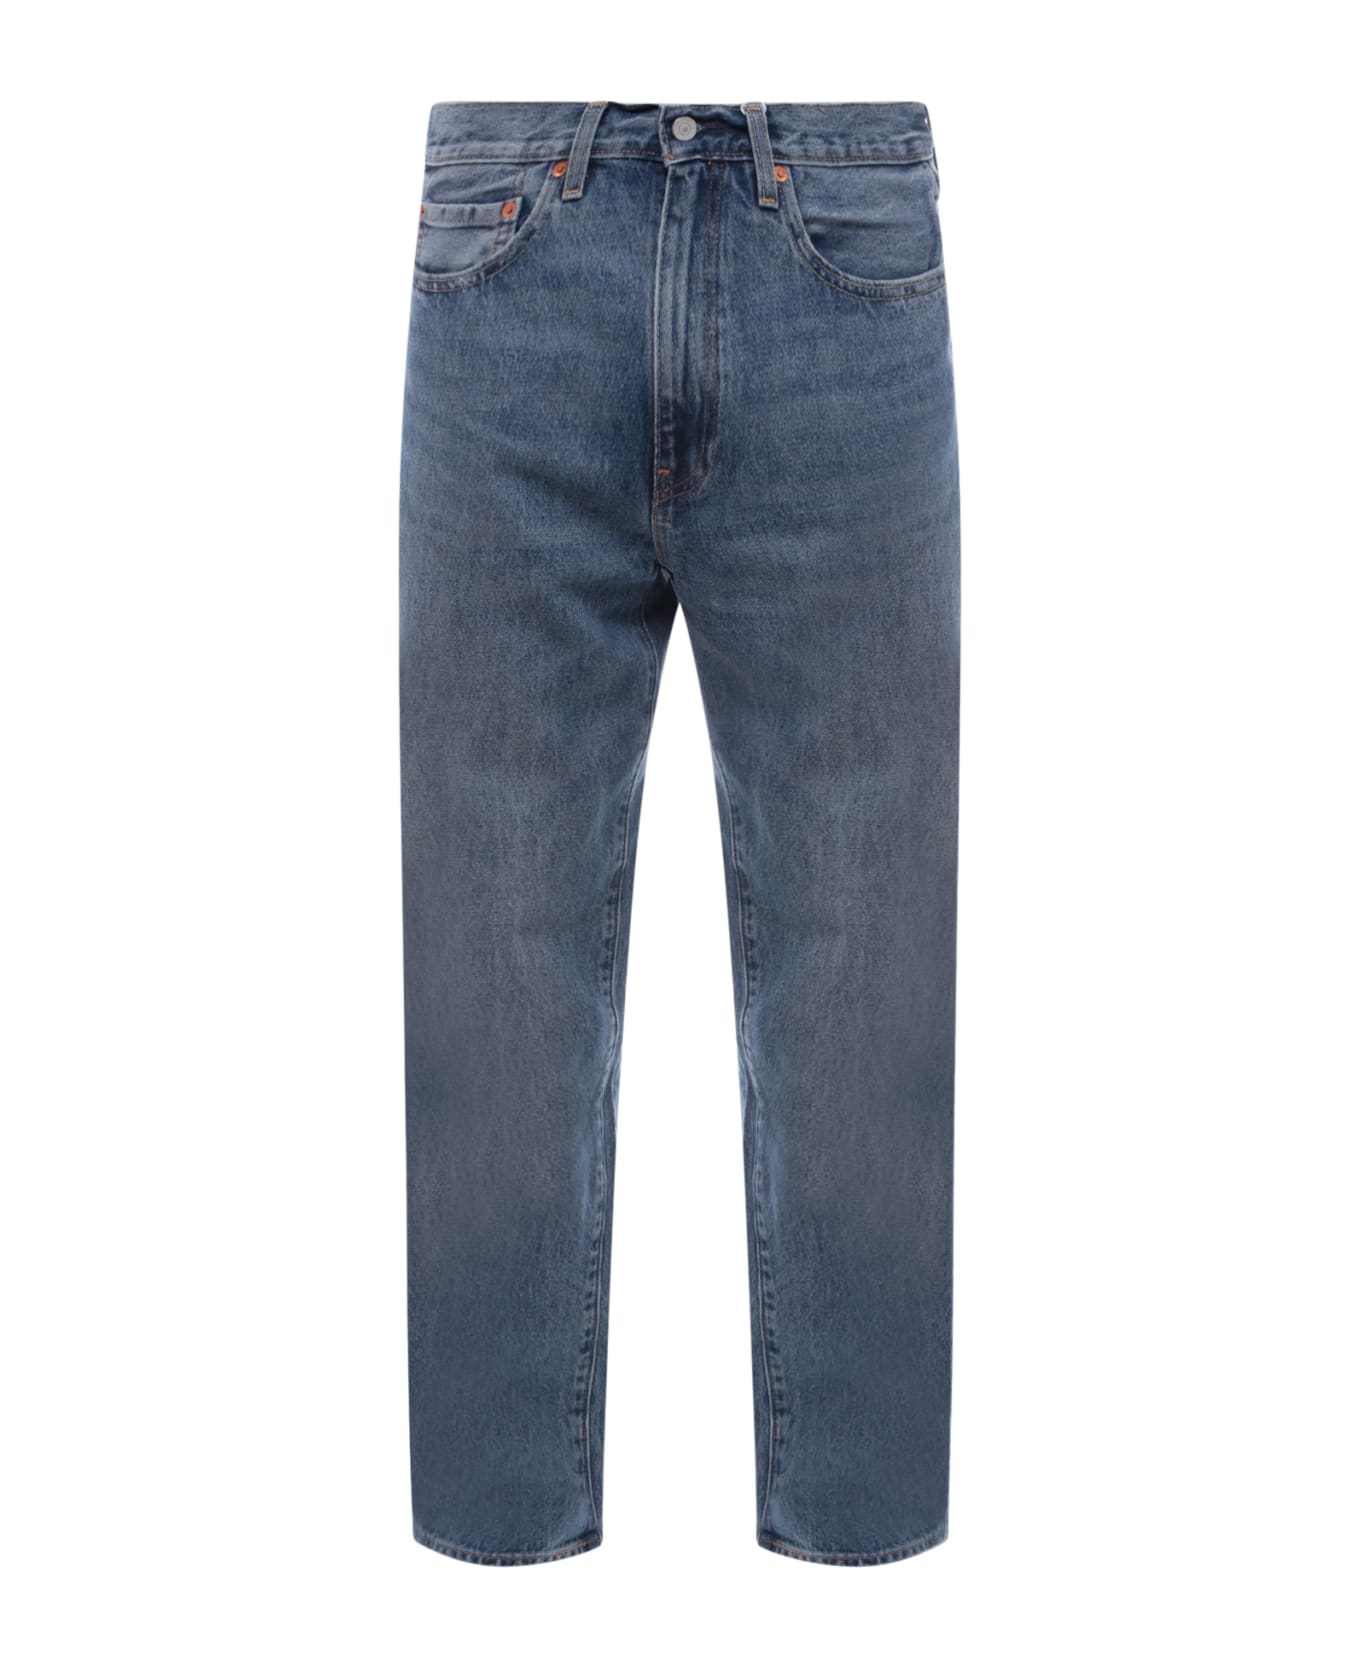 Levi's 568 Jeans - Blue デニム